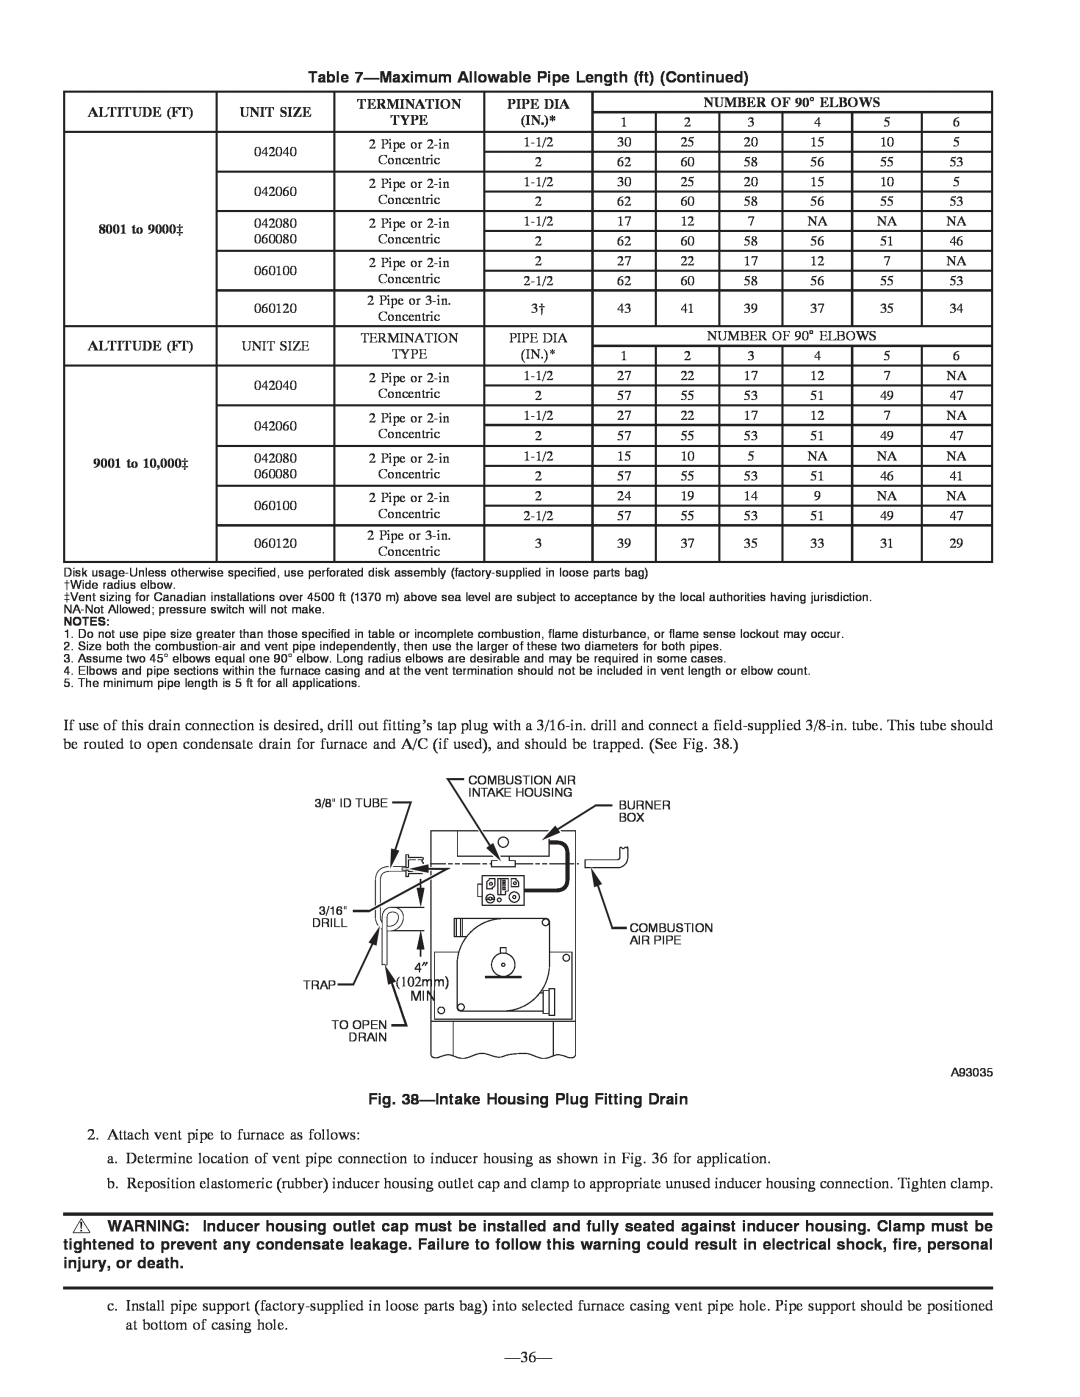 Bryant 355MAV instruction manual IntakeHousing Plug Fitting Drain, MaximumAllowable Pipe Length ft Continued 